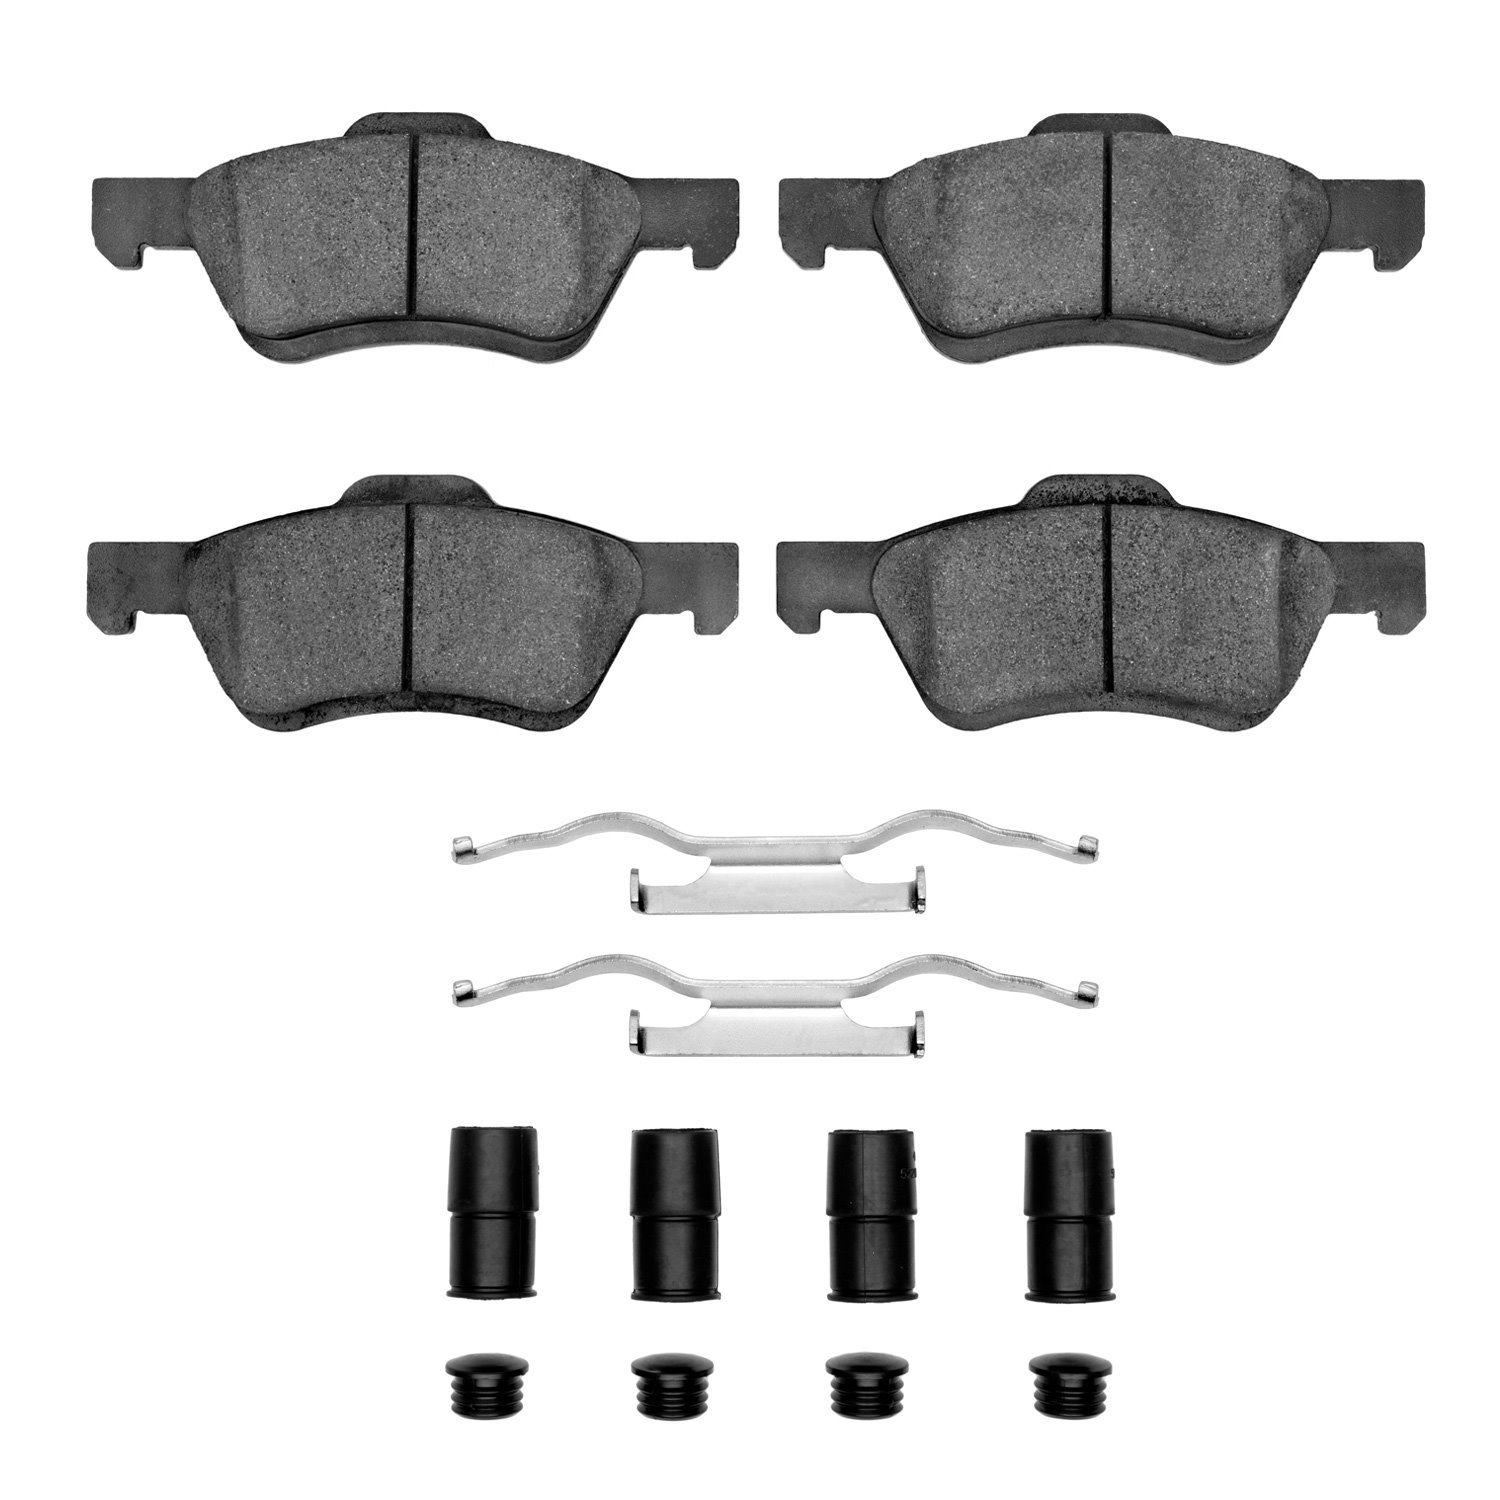 1310-1047-32 3000-Series Ceramic Brake Pads & Hardware Kit, 2009-2012 Ford/Lincoln/Mercury/Mazda, Position: Front